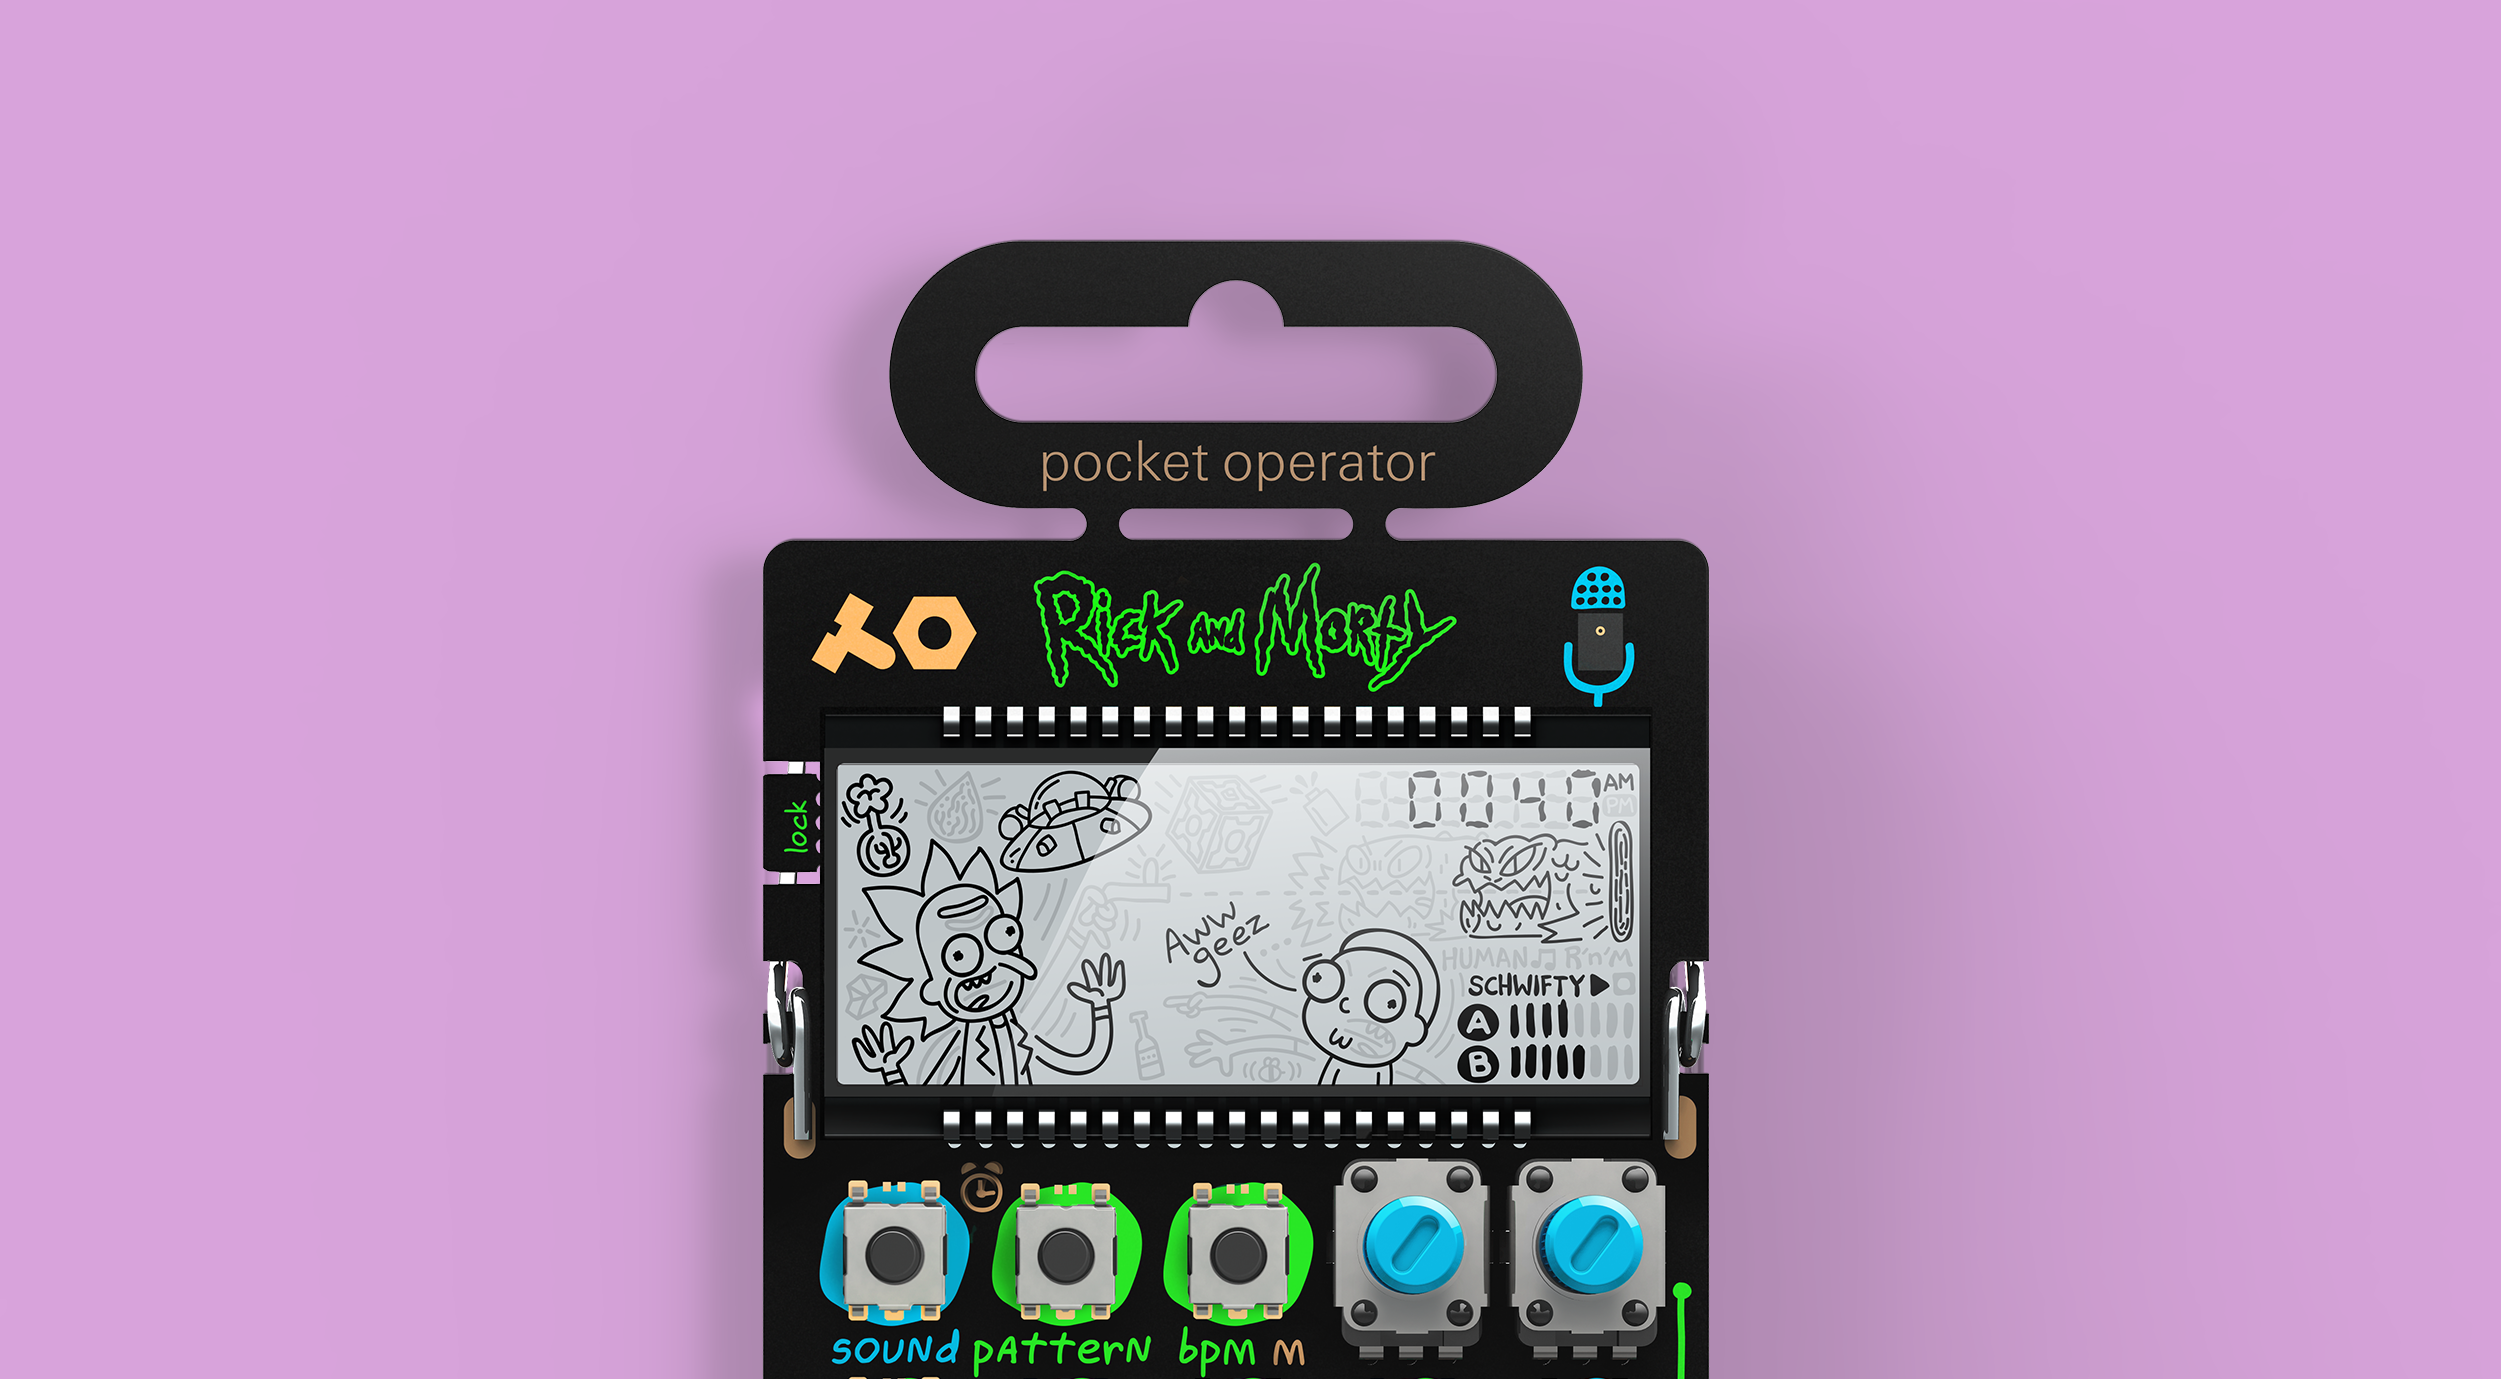 Pocket Operator LCD display